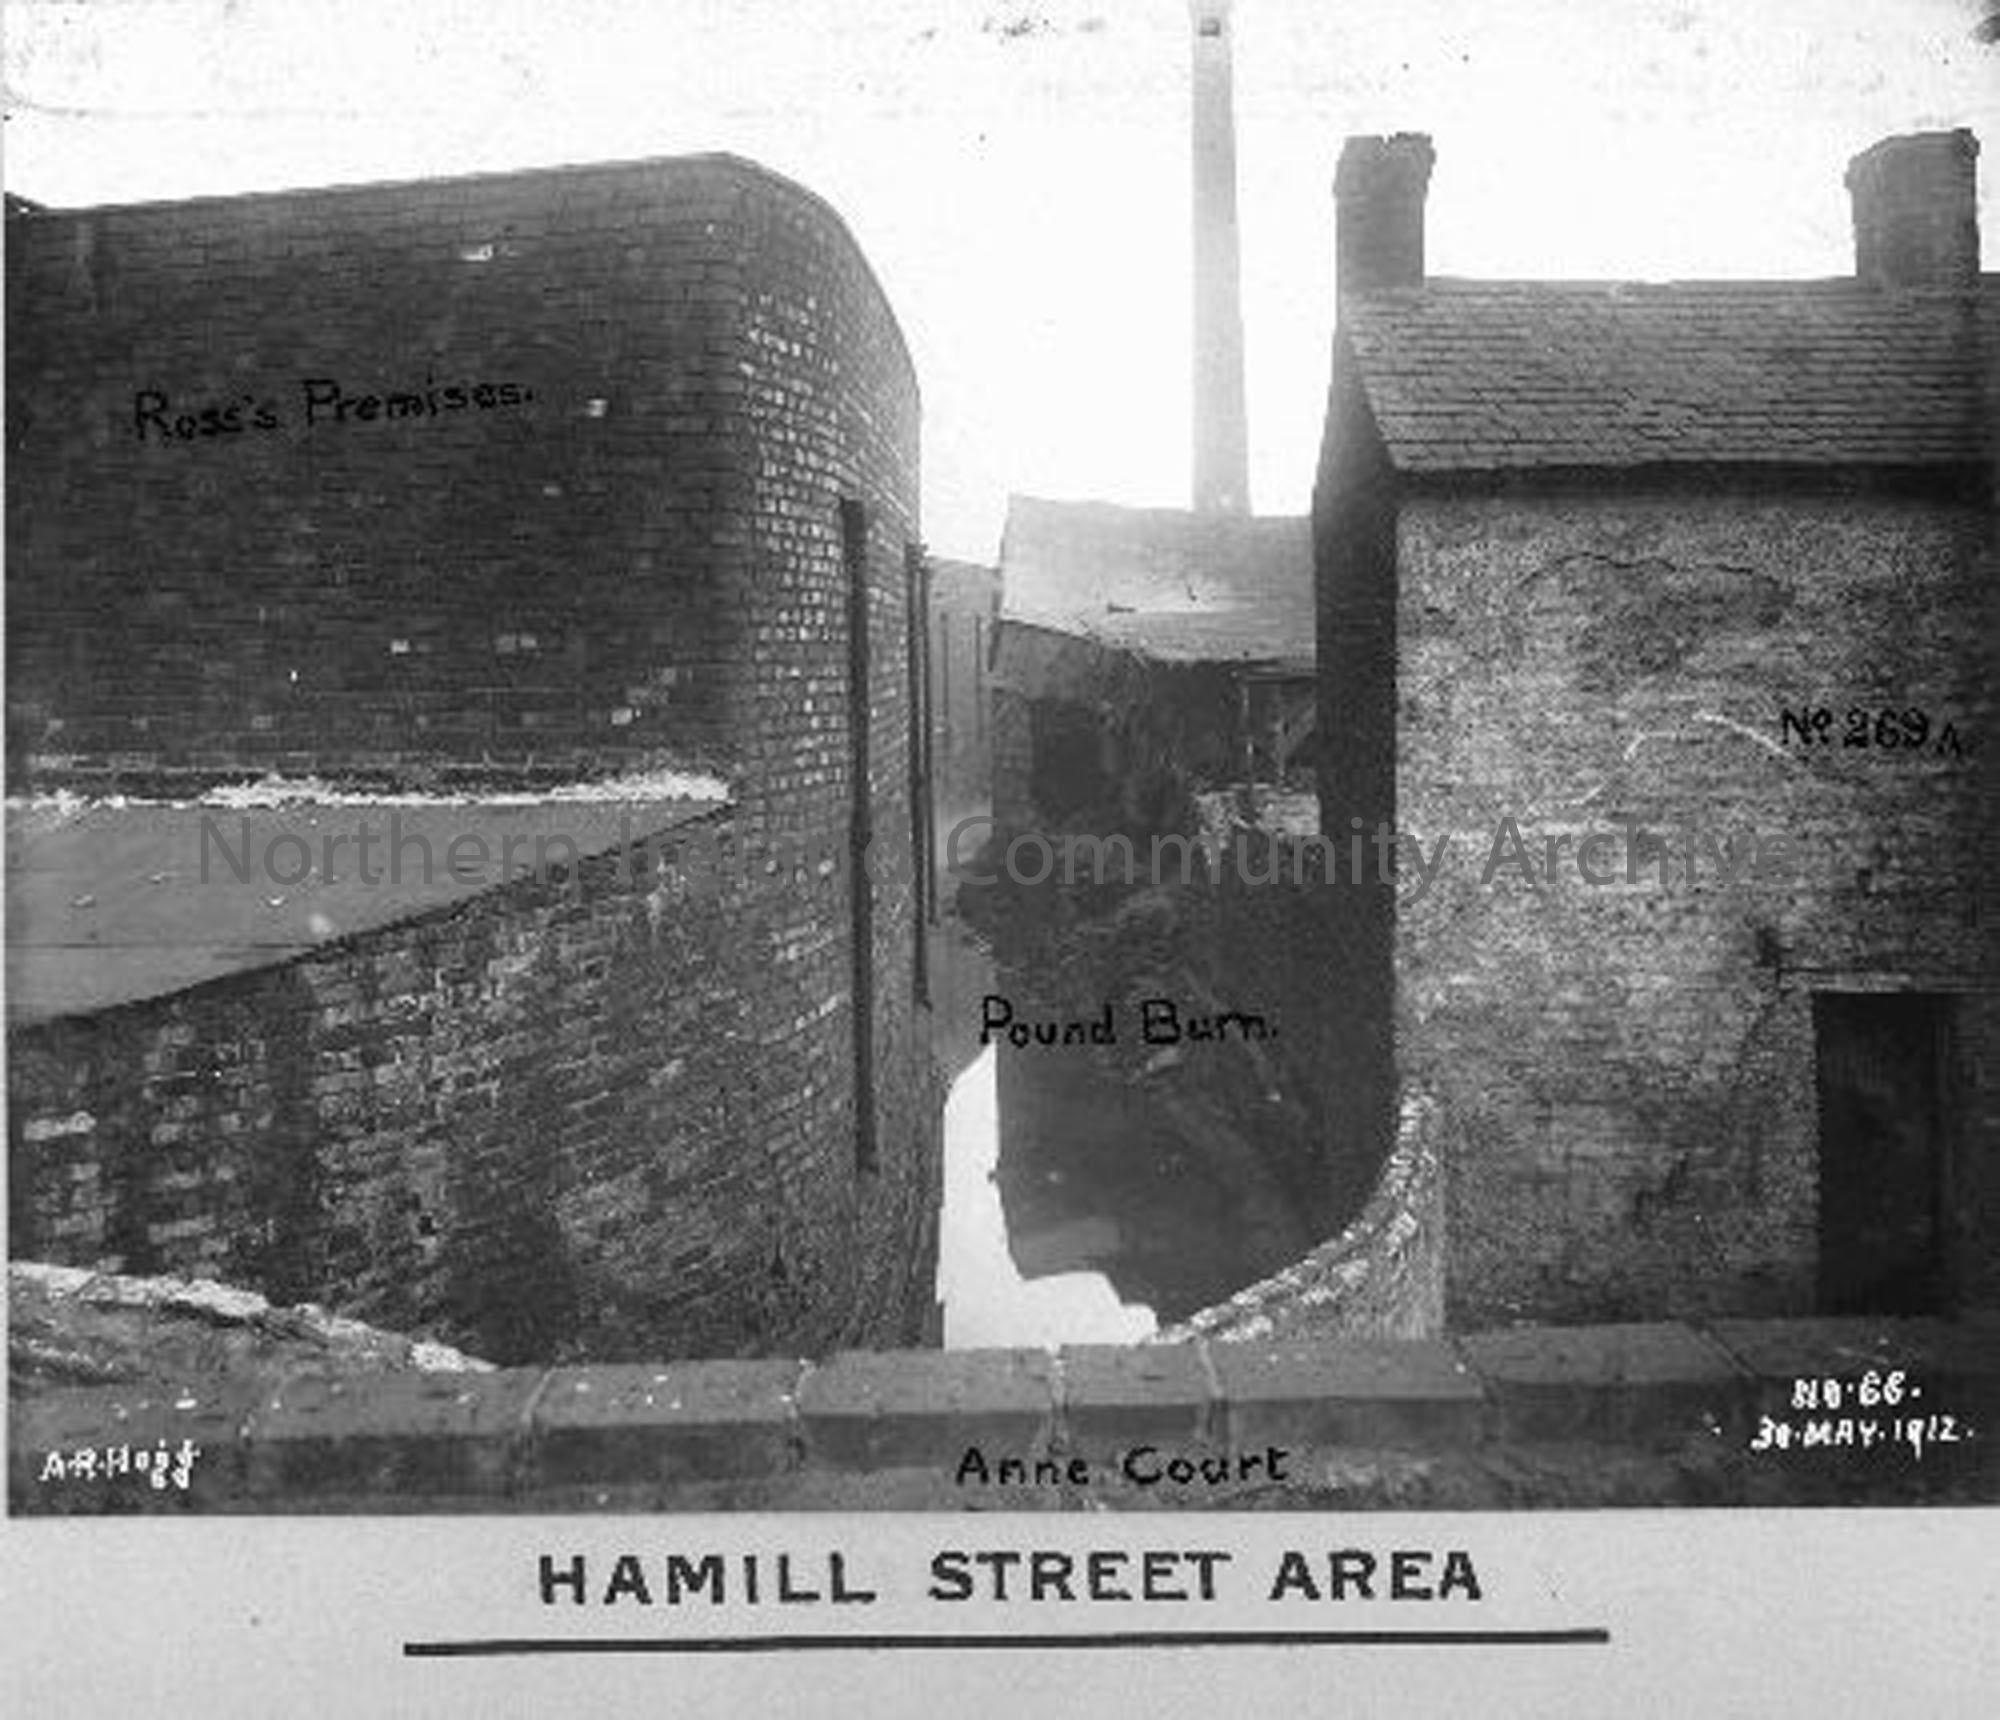 Hamill Street Area – Anne Court (1969)